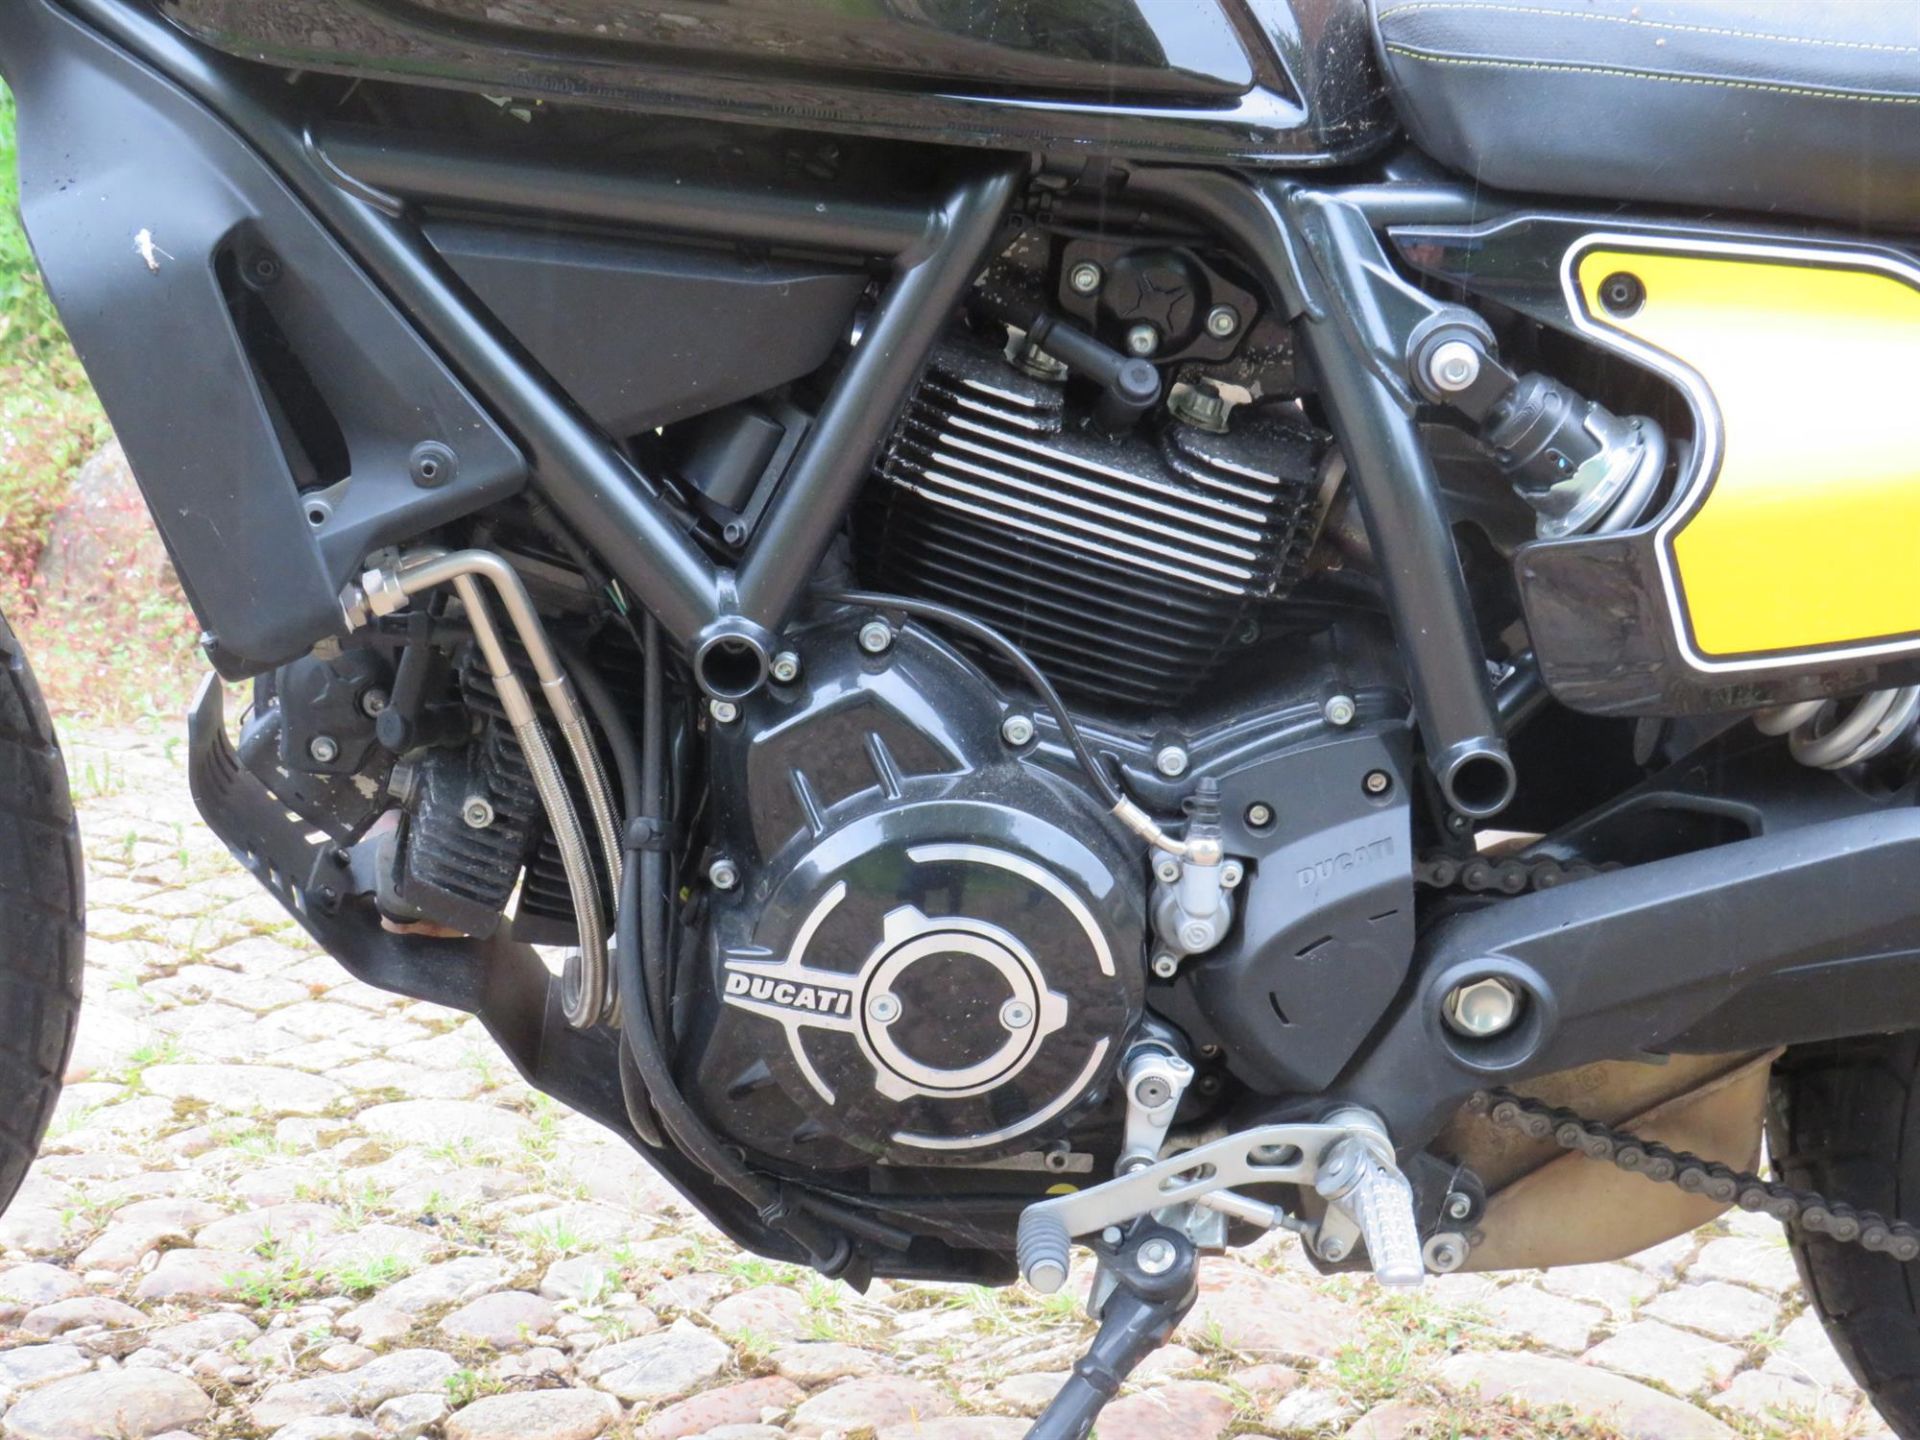 2019 Ducati Scrambler Full Throttle 803cc - Image 4 of 10